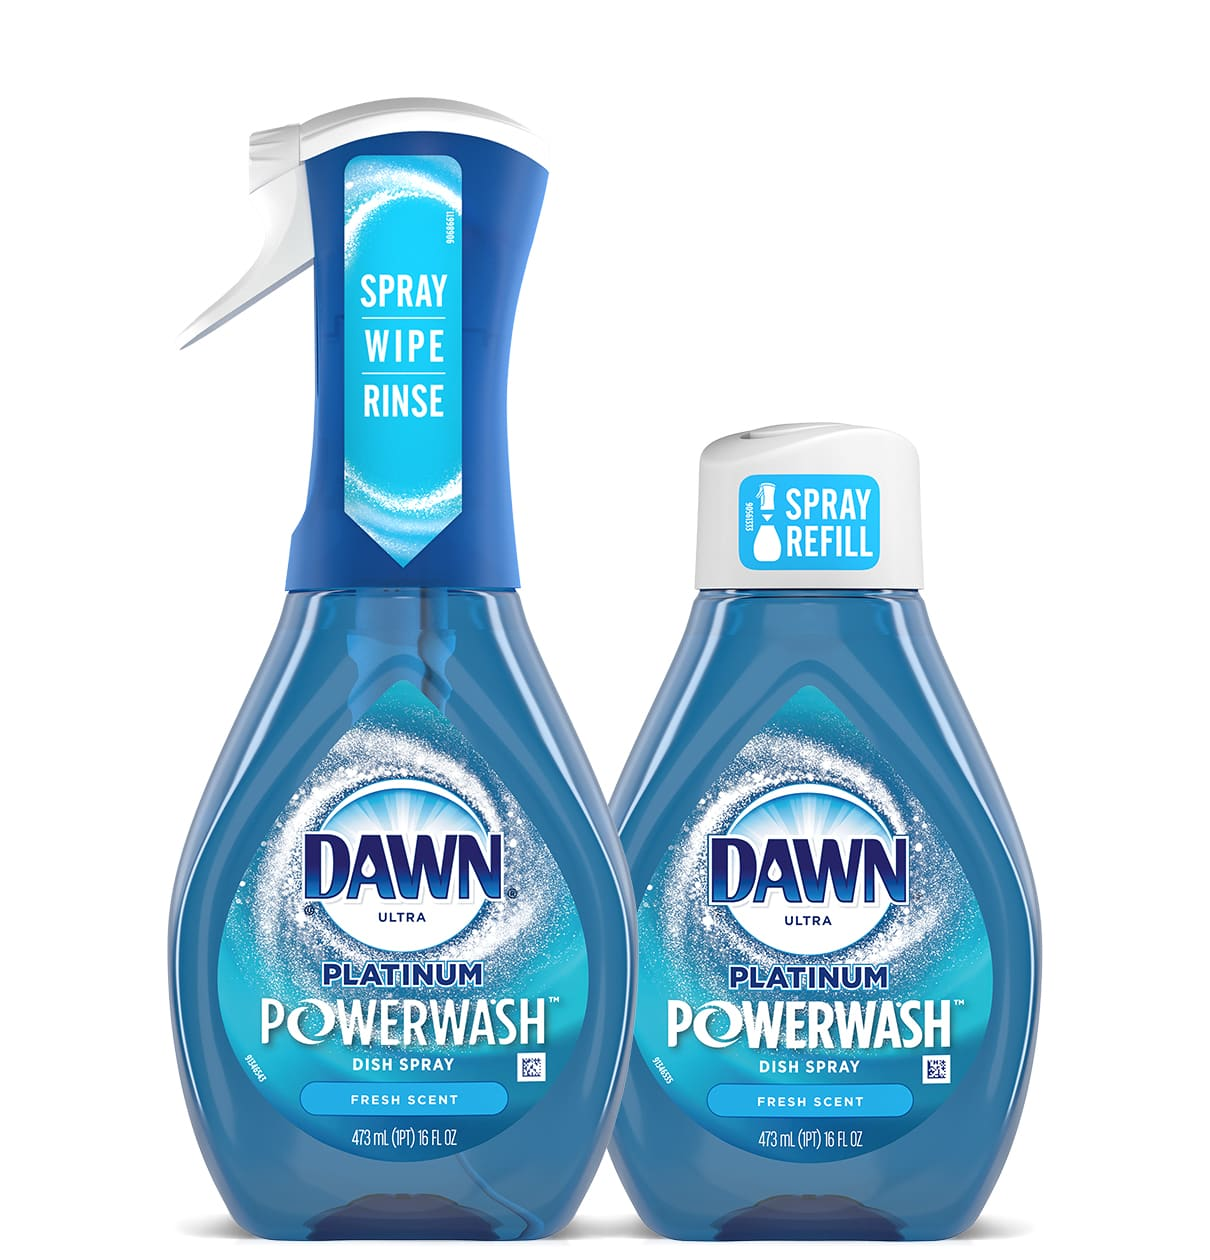 Platinum Powerwash Dish Spray